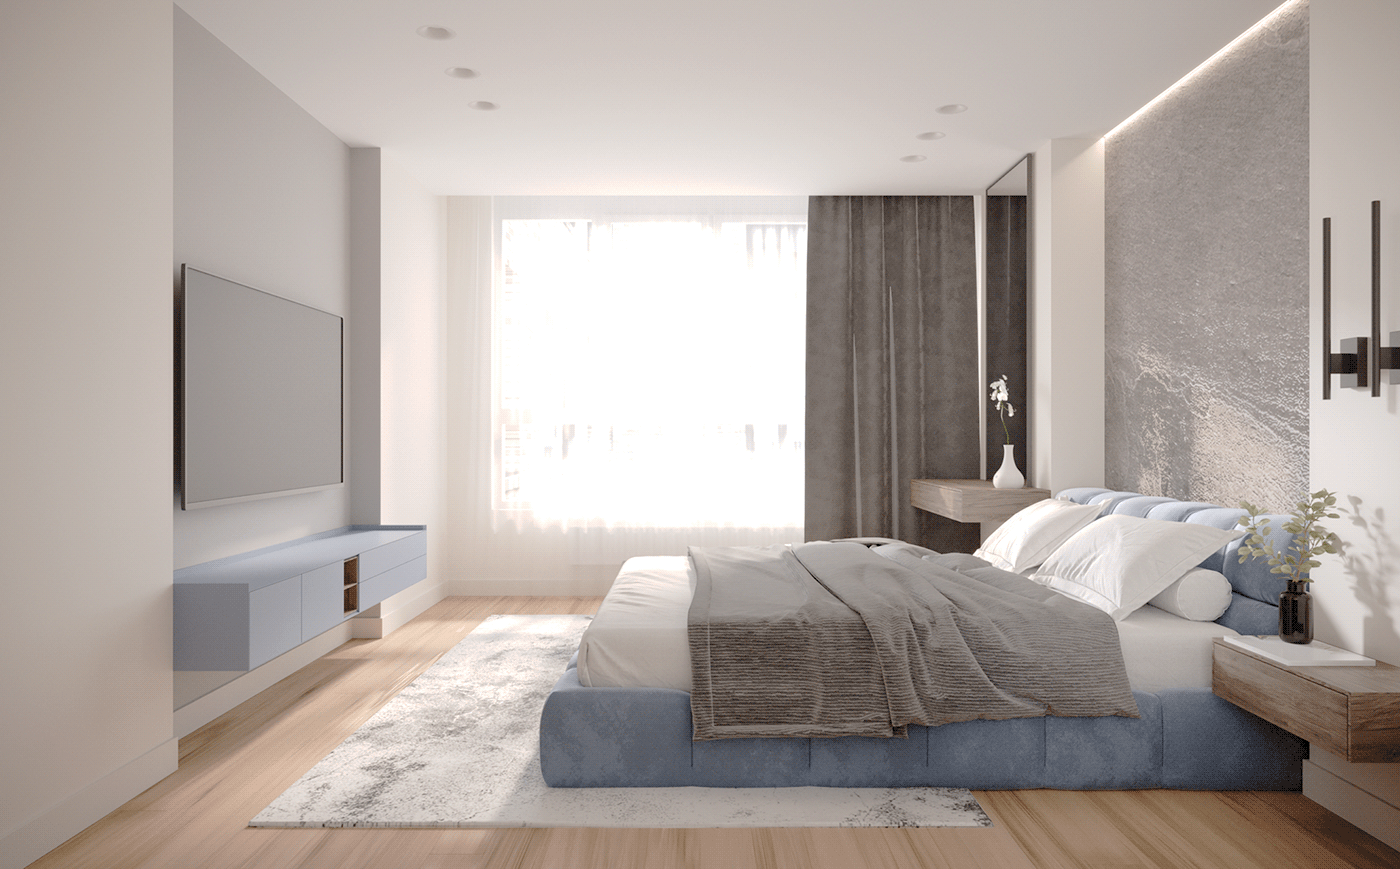 3ds max bedroom corona render  designer Interior interior design  modern portfolio Render visualization